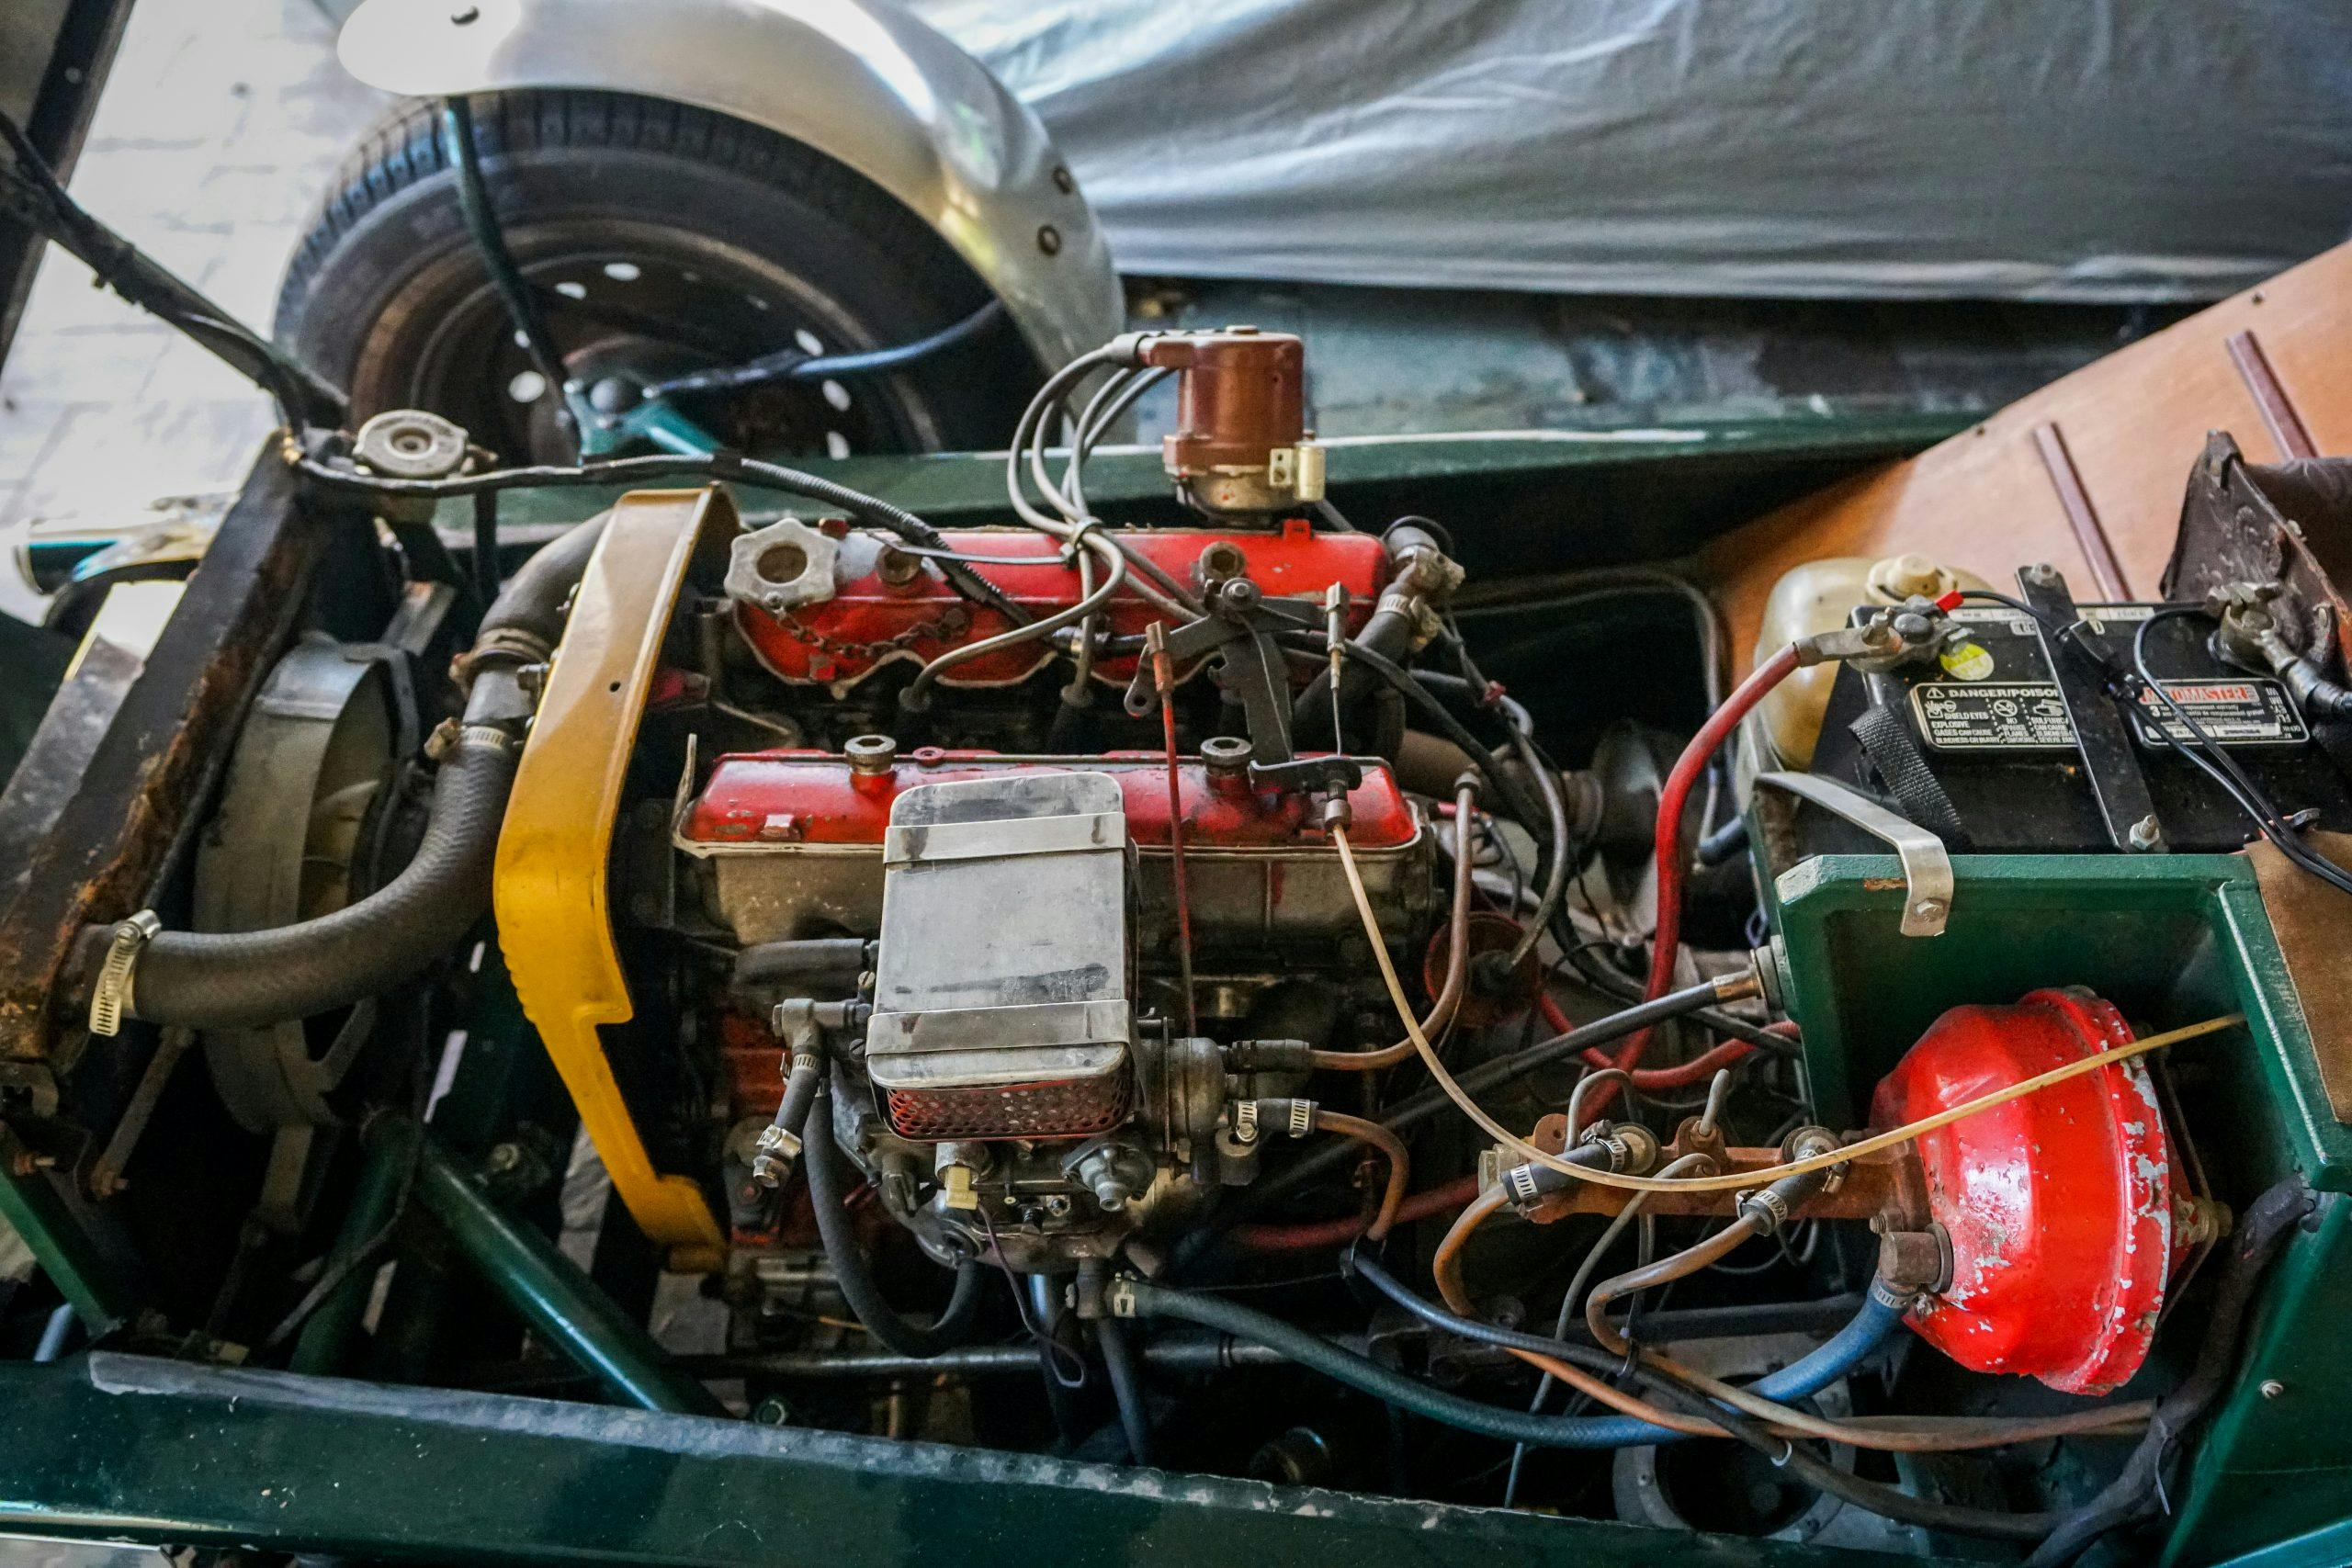 Toly Arutunoff Michel Pistol bespoke Fiat engine